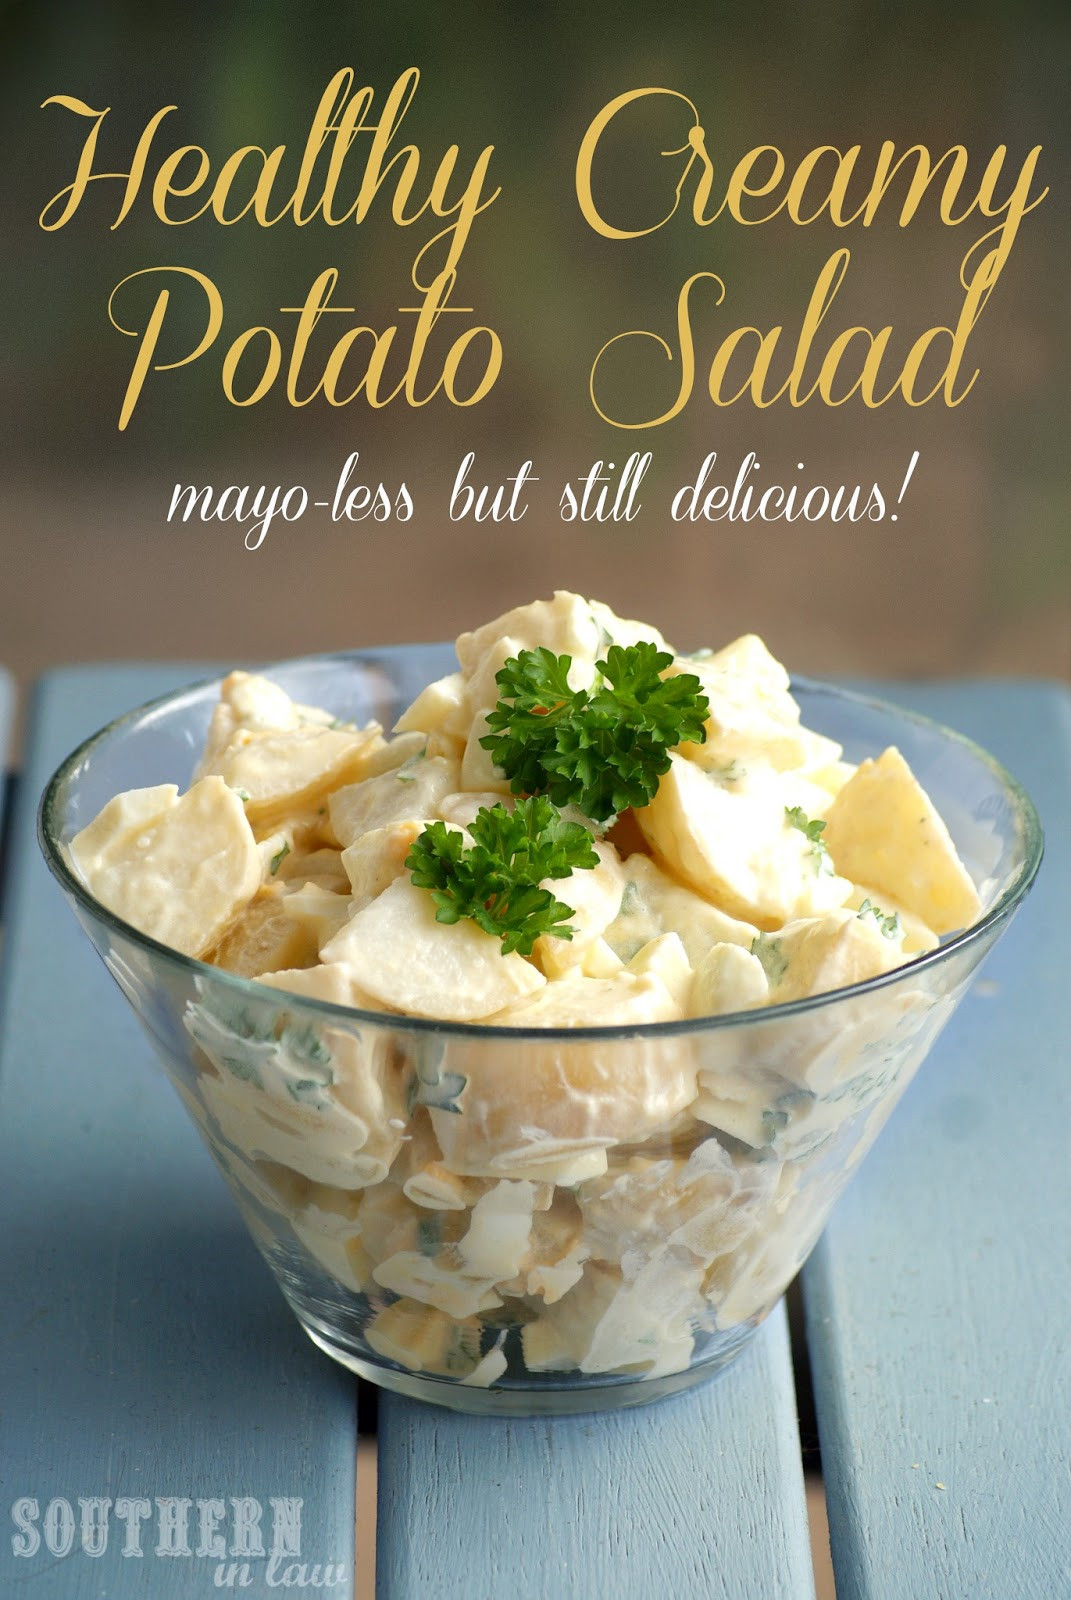 Healthy Potato Salad Recipe
 Southern In Law Recipe Healthy Potato Salad Mayo less